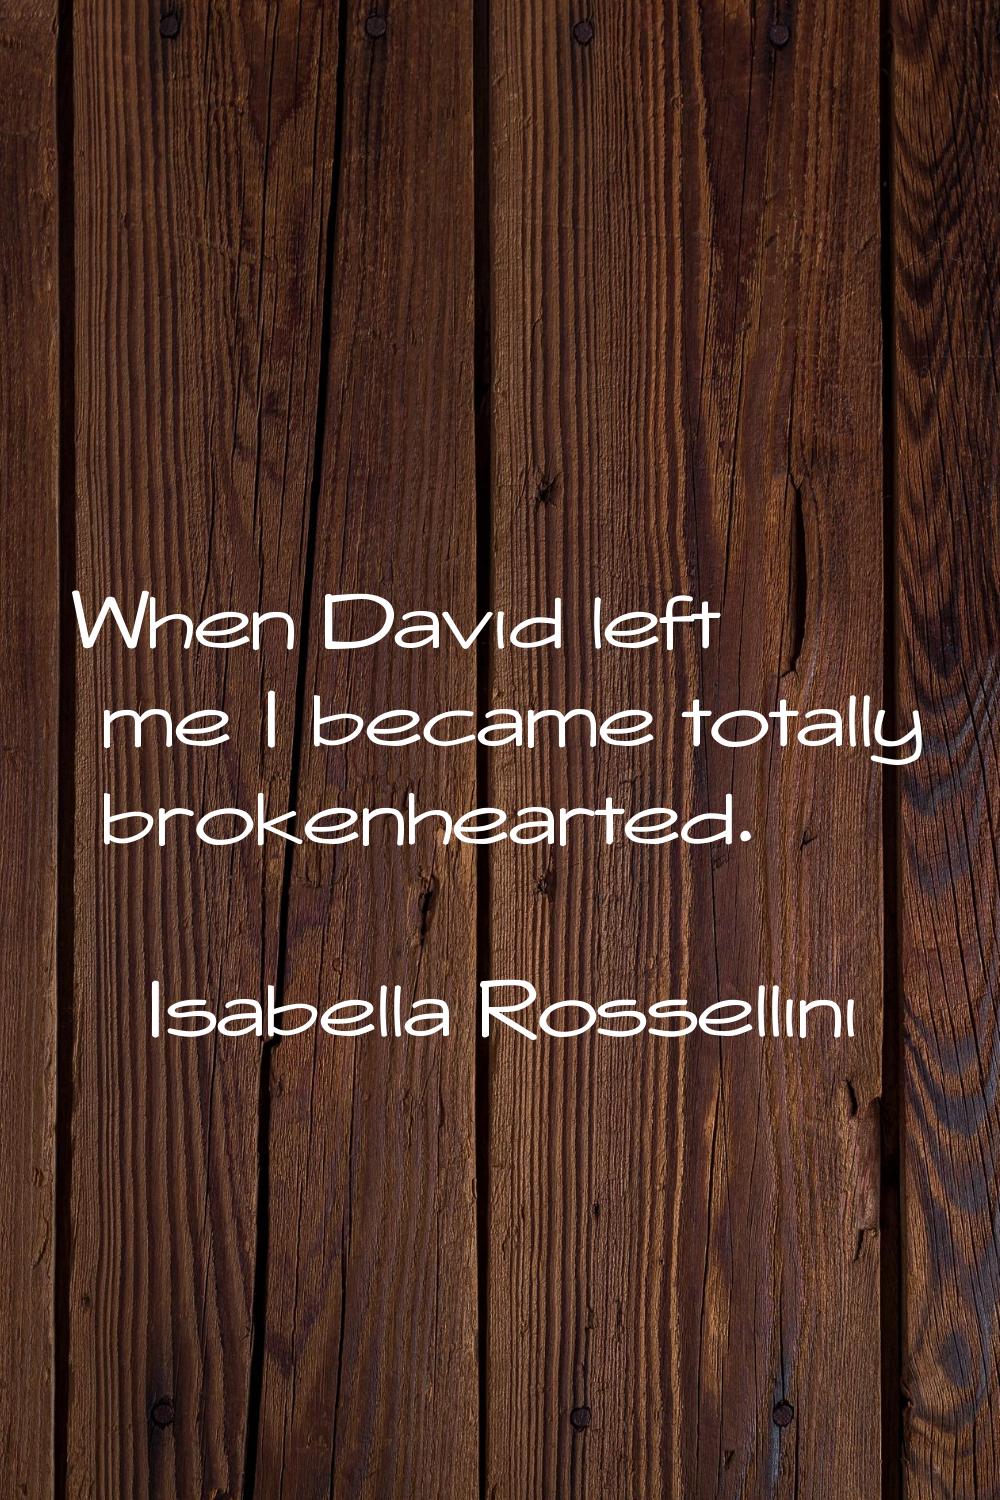 When David left me I became totally brokenhearted.